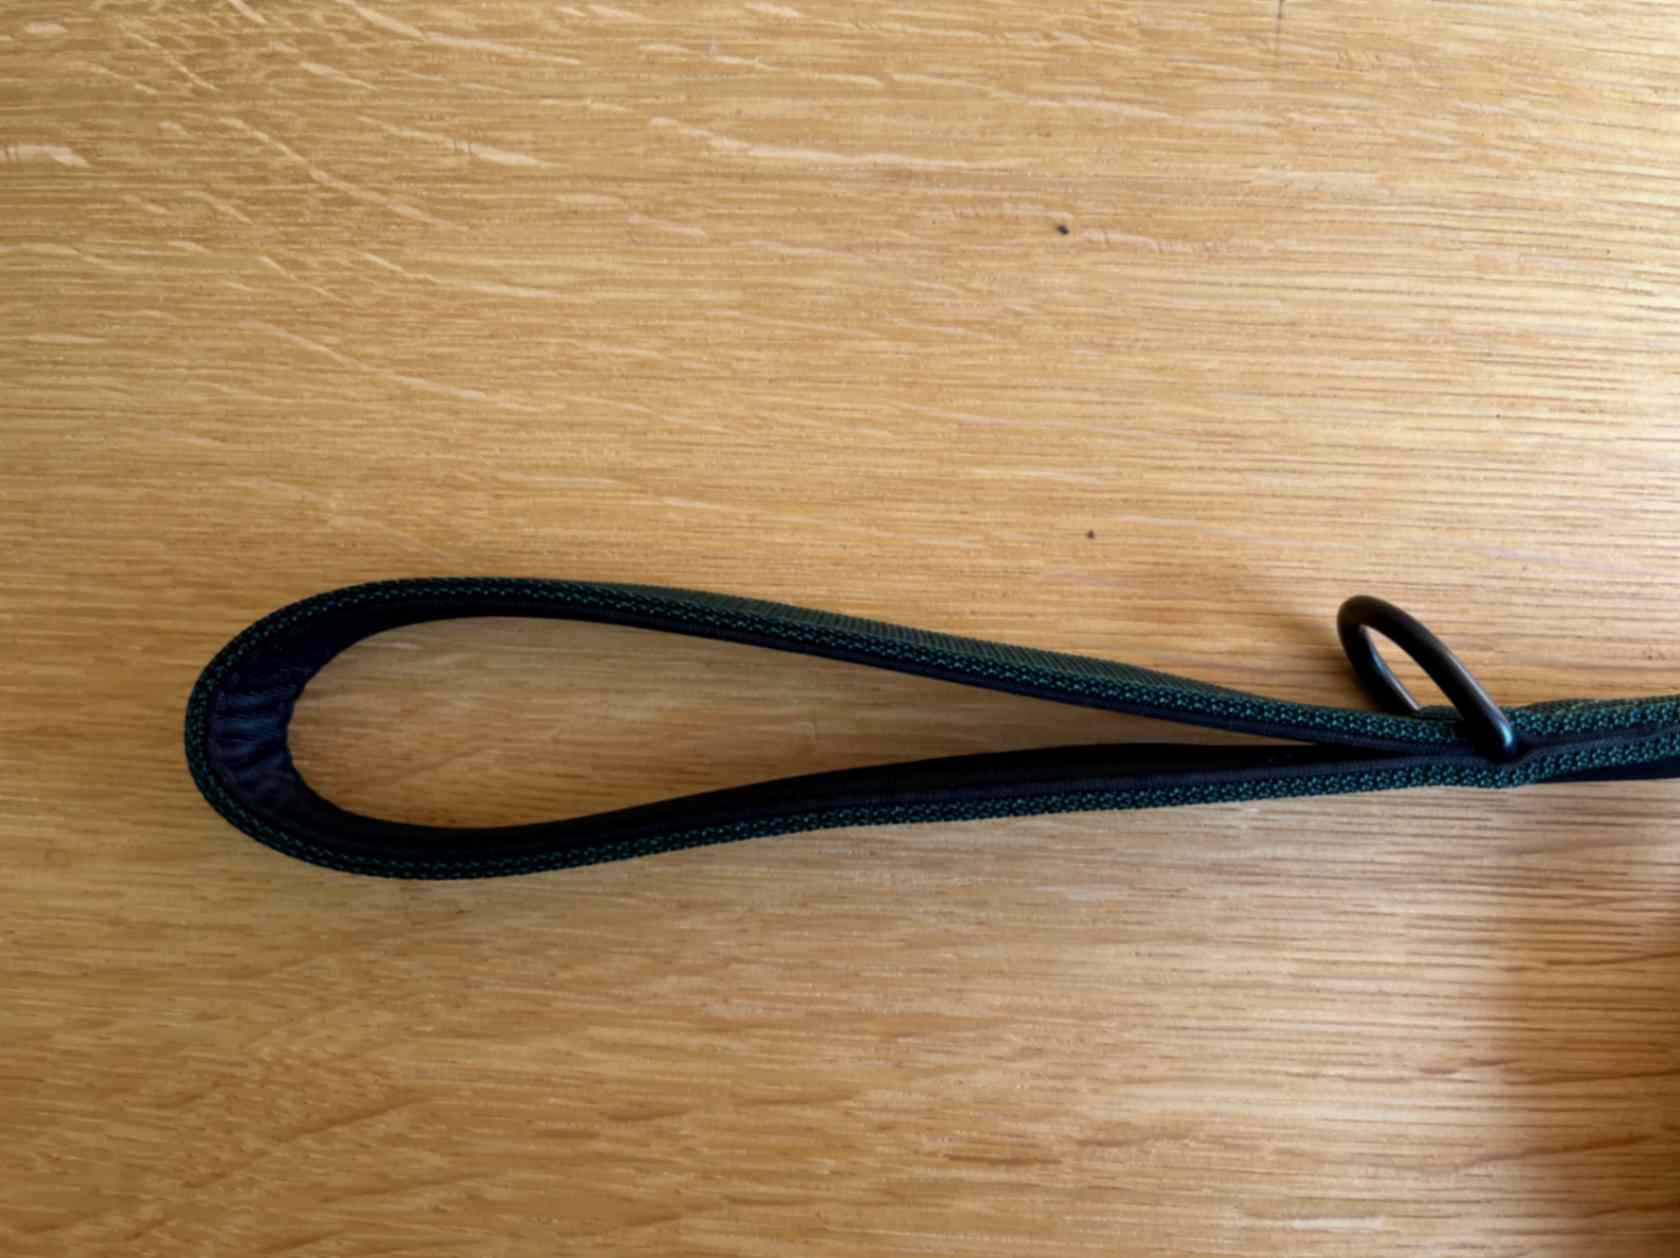 Handle of dark green dog leash